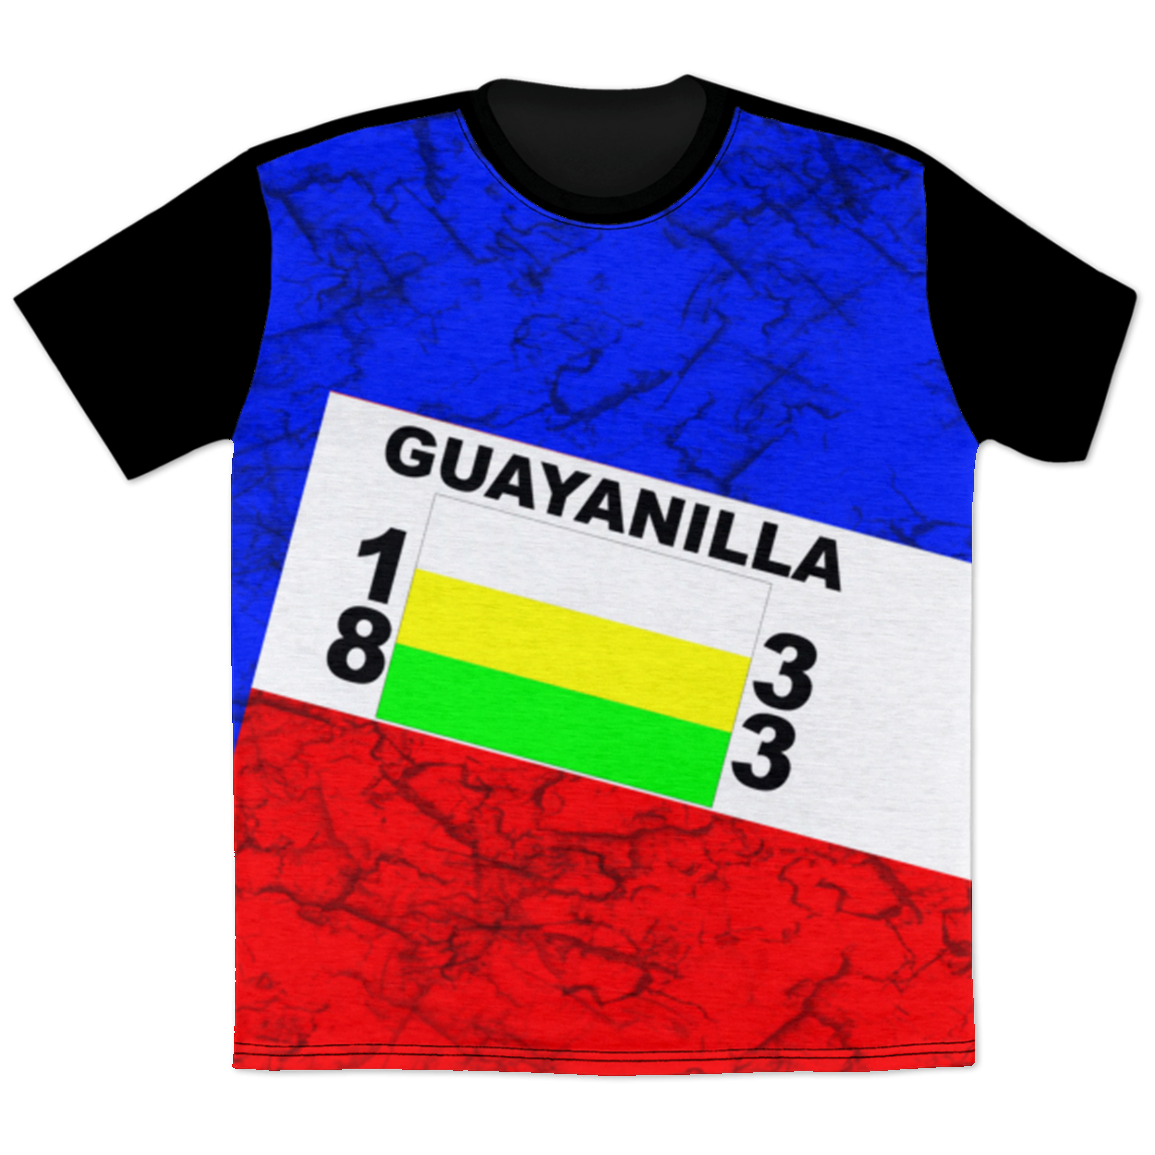 Guayanilla T-Shirt - Puerto Rican Pride